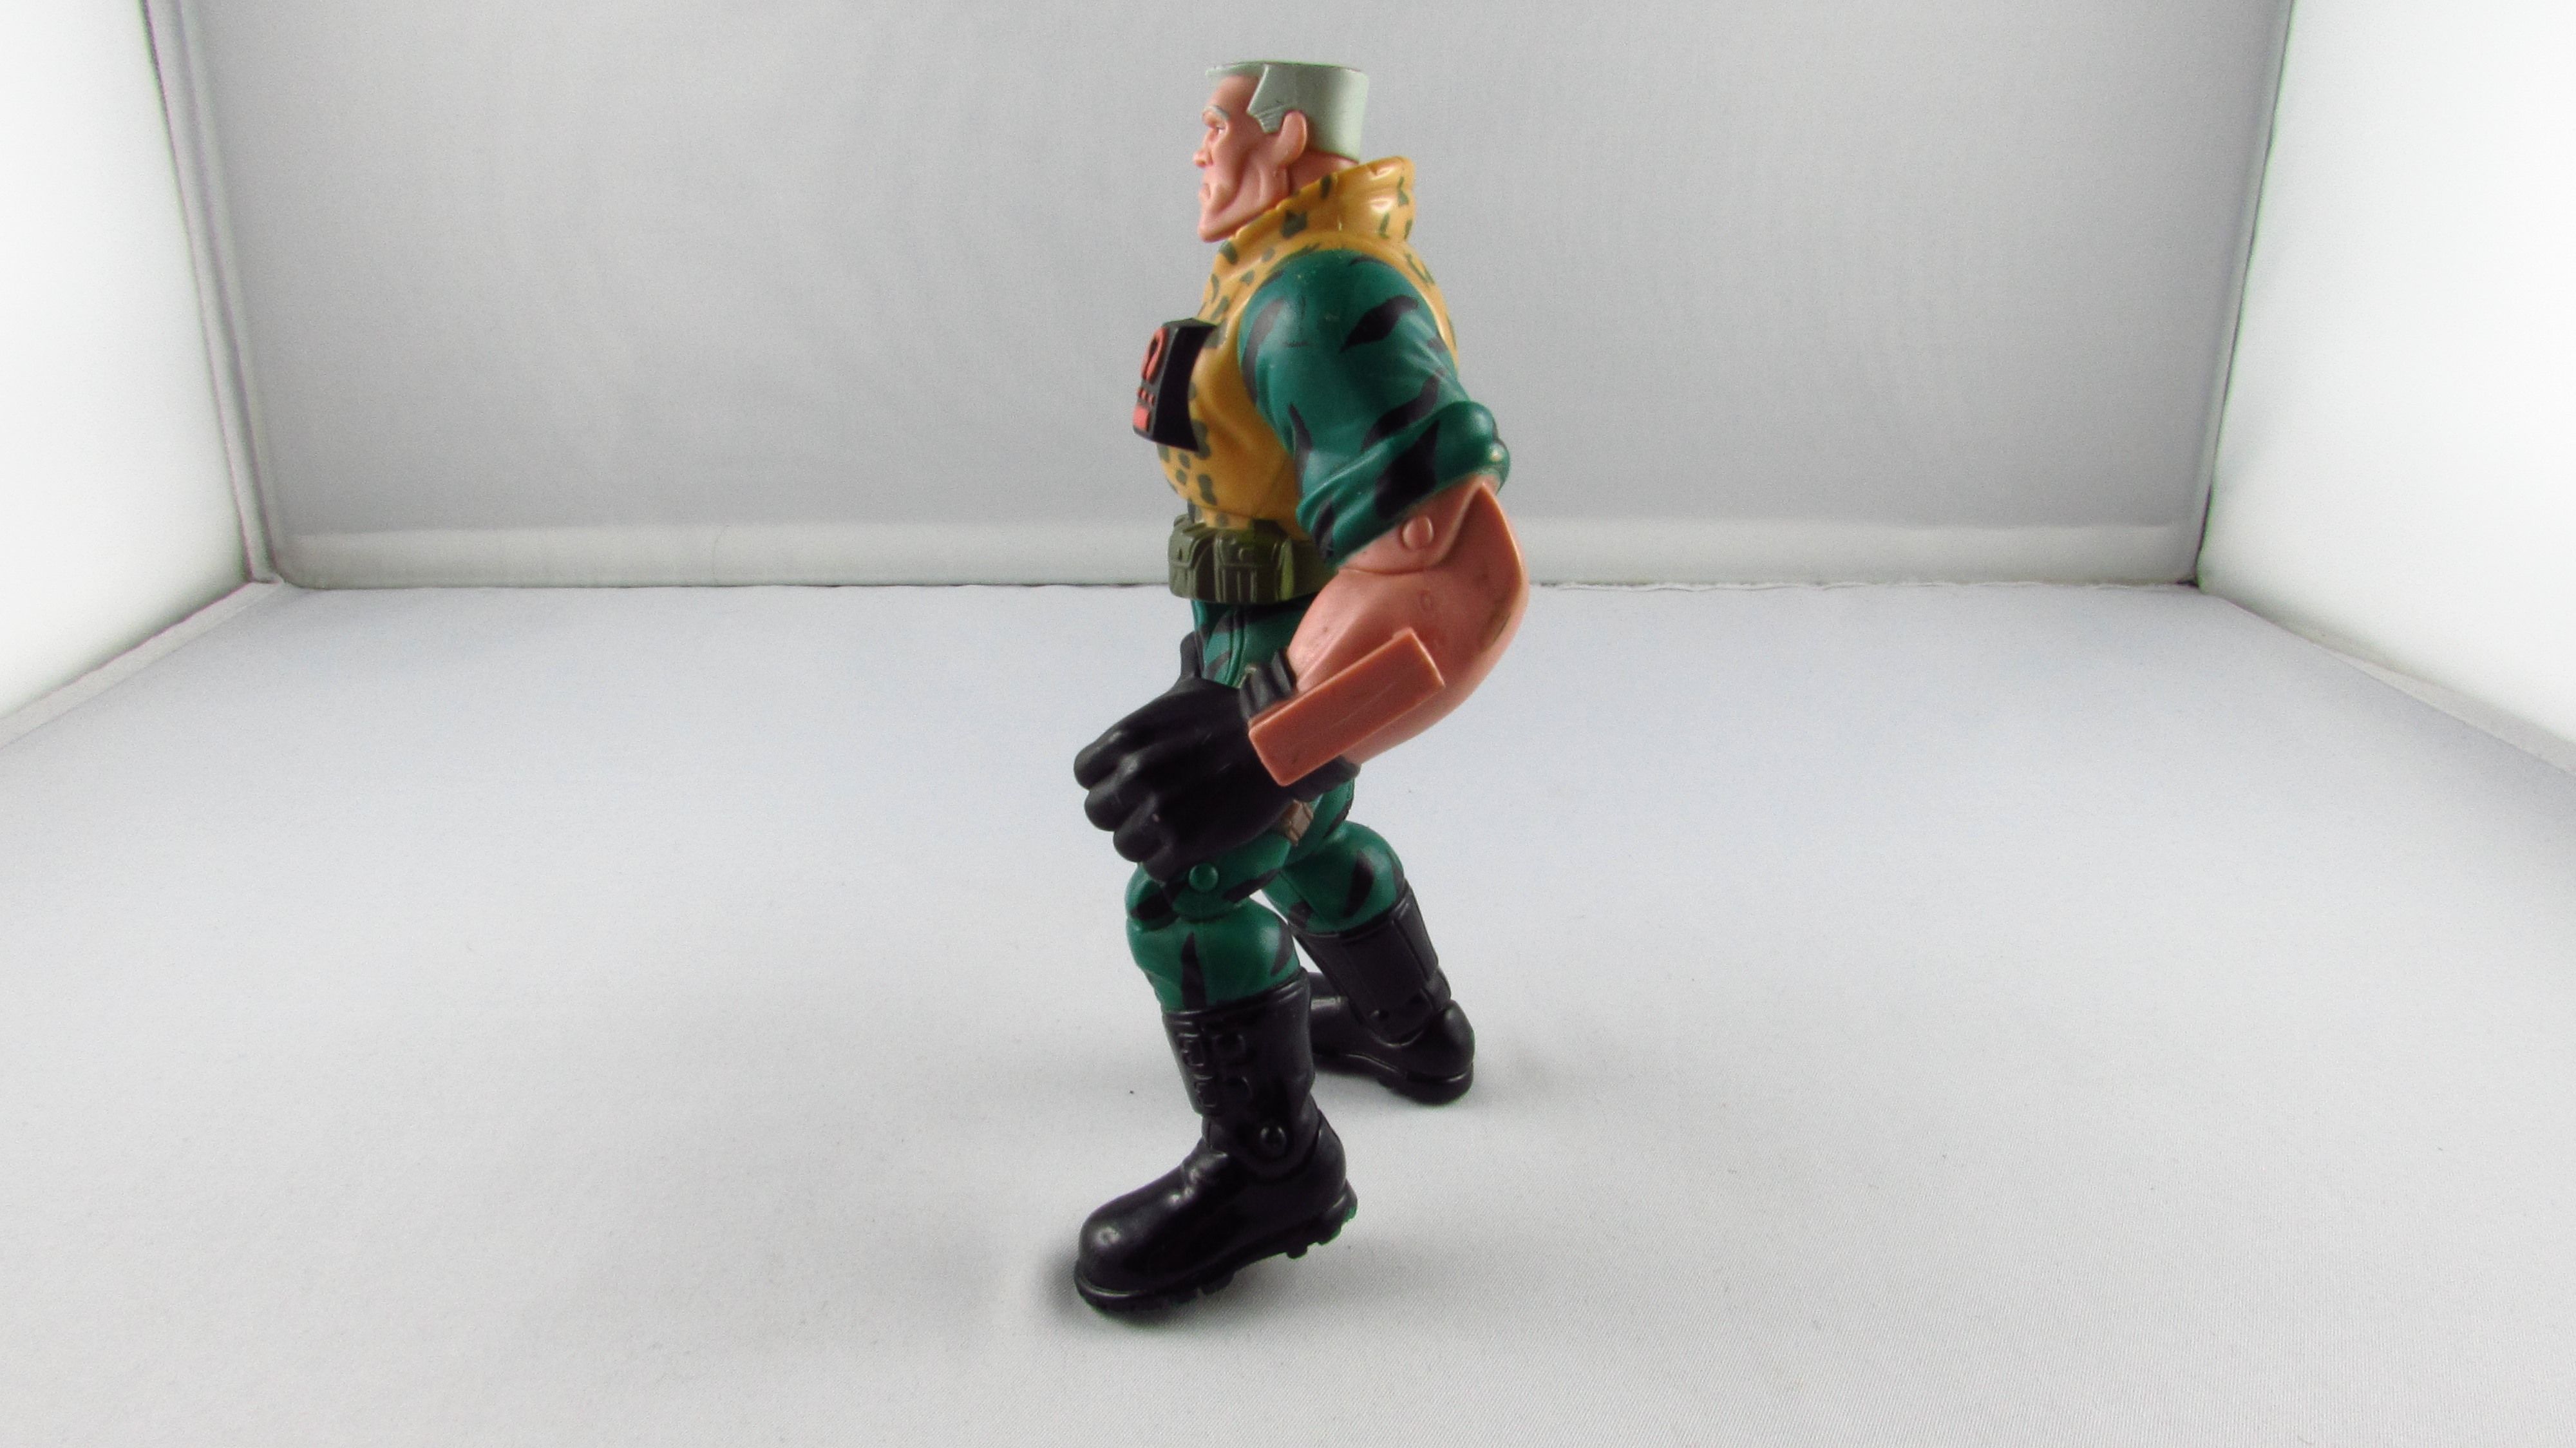 HASBRO - Small Soldiers - Chip Hazard Figurka kolekcjonerska 1998 r.